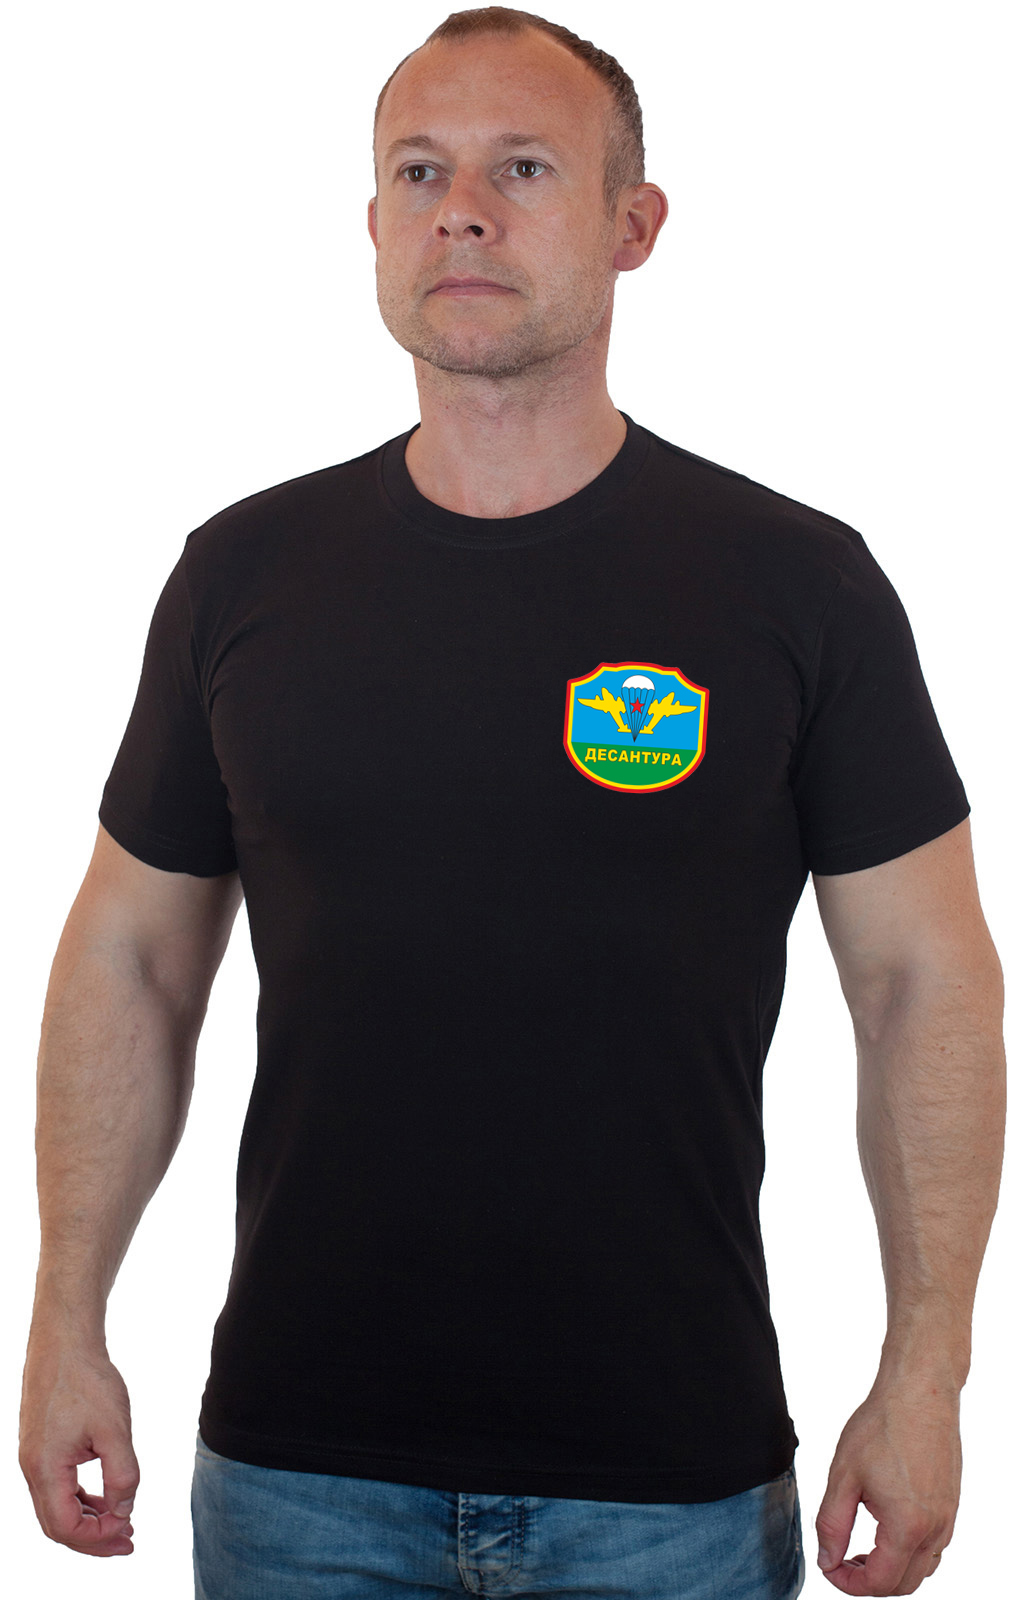 Чёрная футболка "Десантура" 